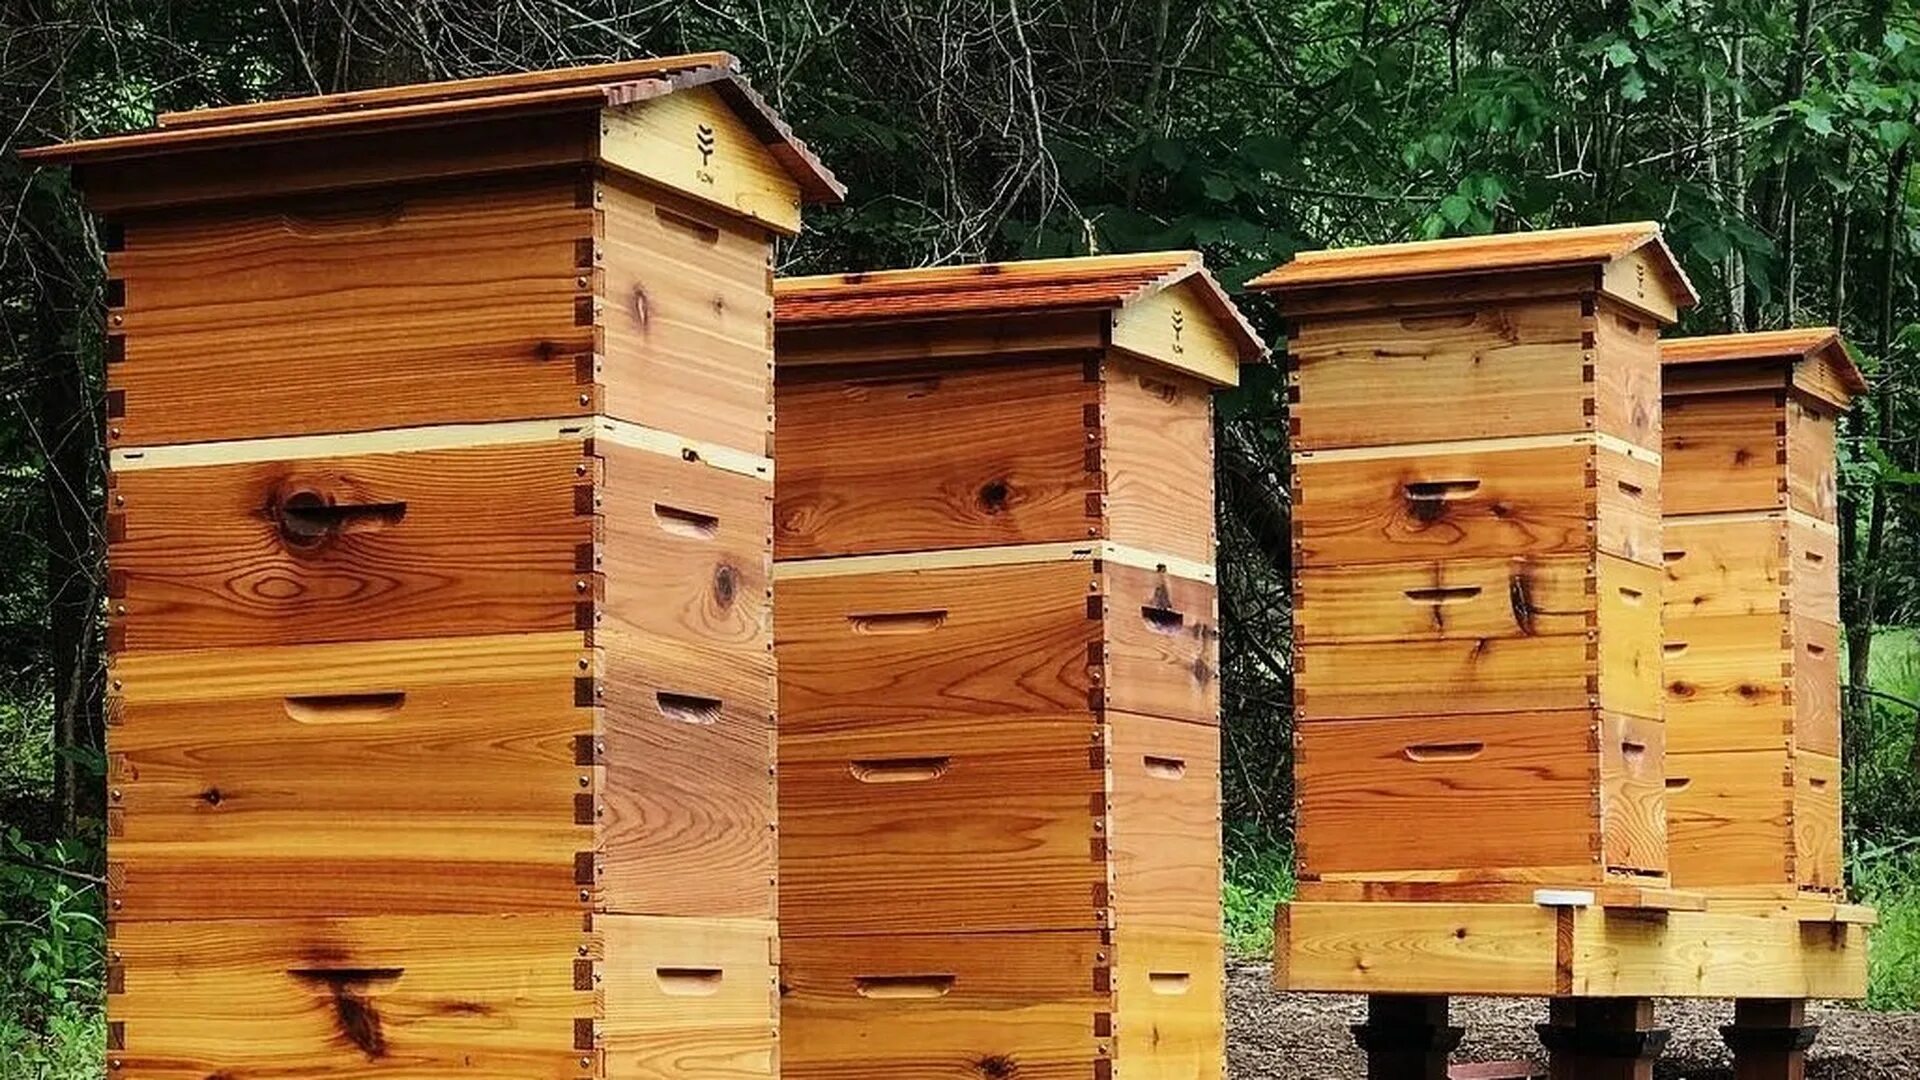 Улей Flow Hive. Flow Hive Honey ульи. Улья Fort Hive. Домик для пчел.